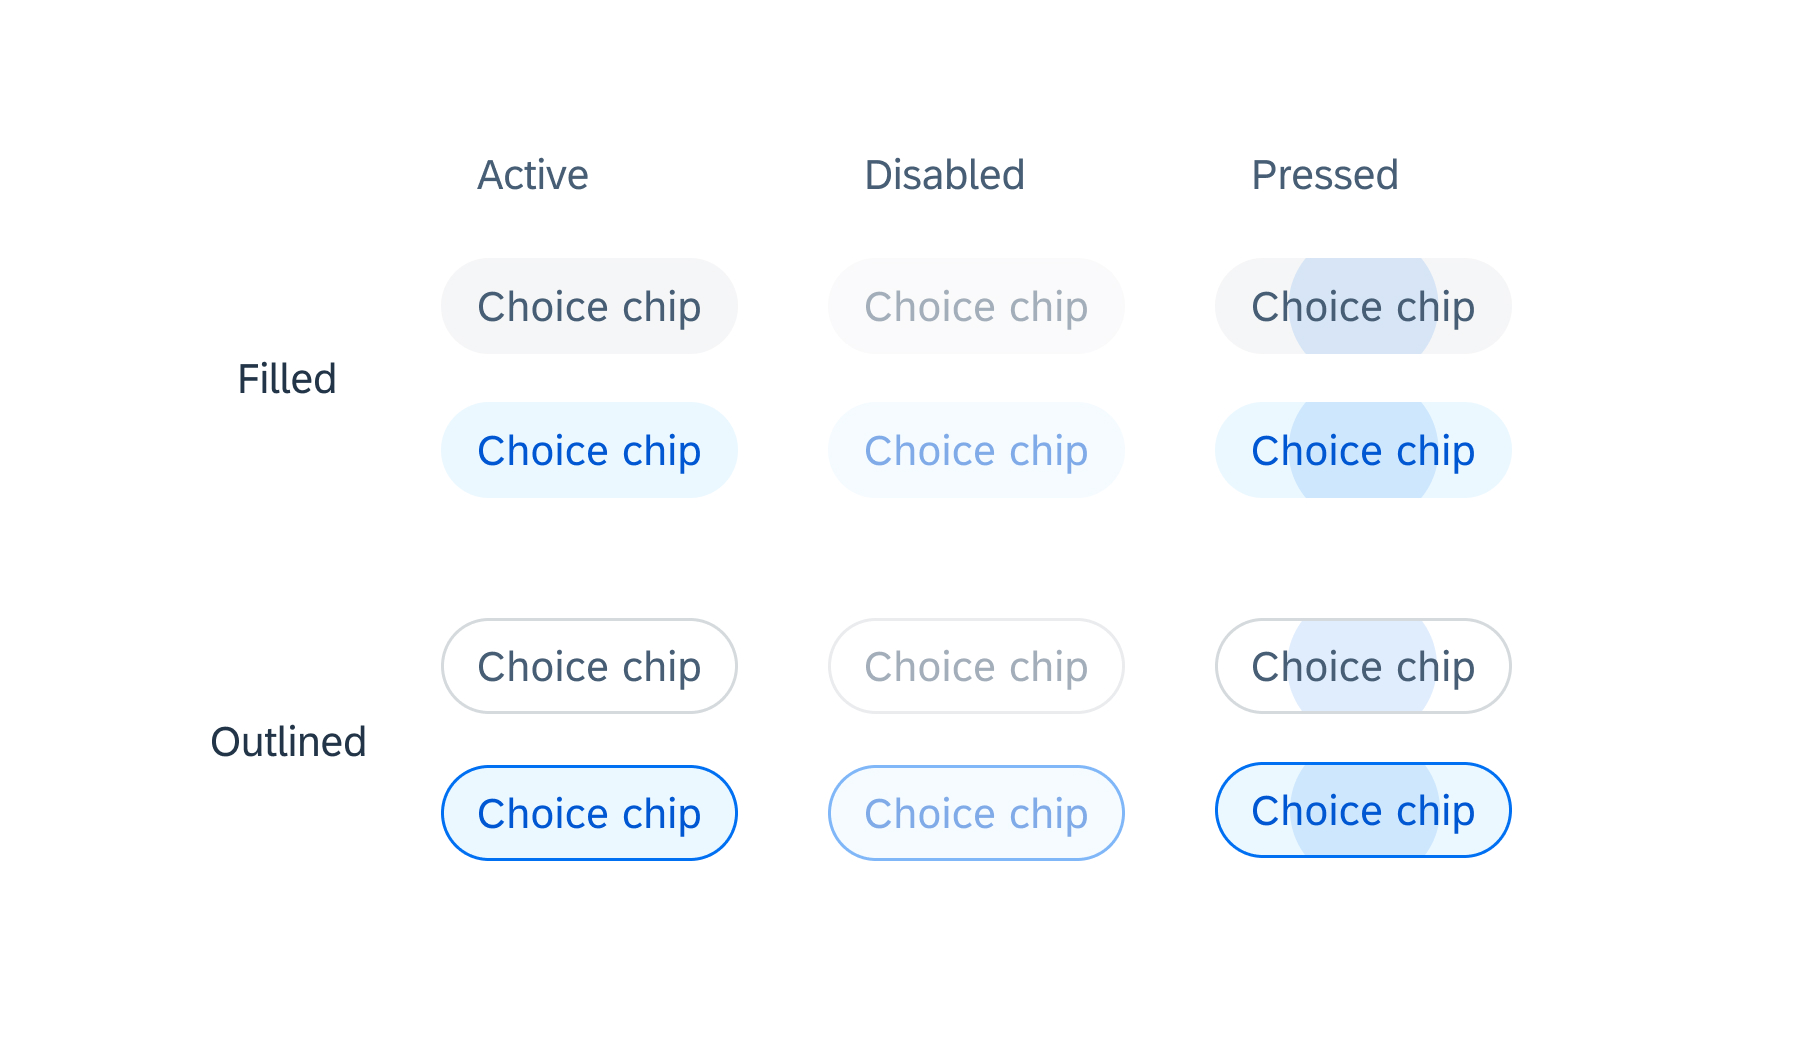 Choice chip states